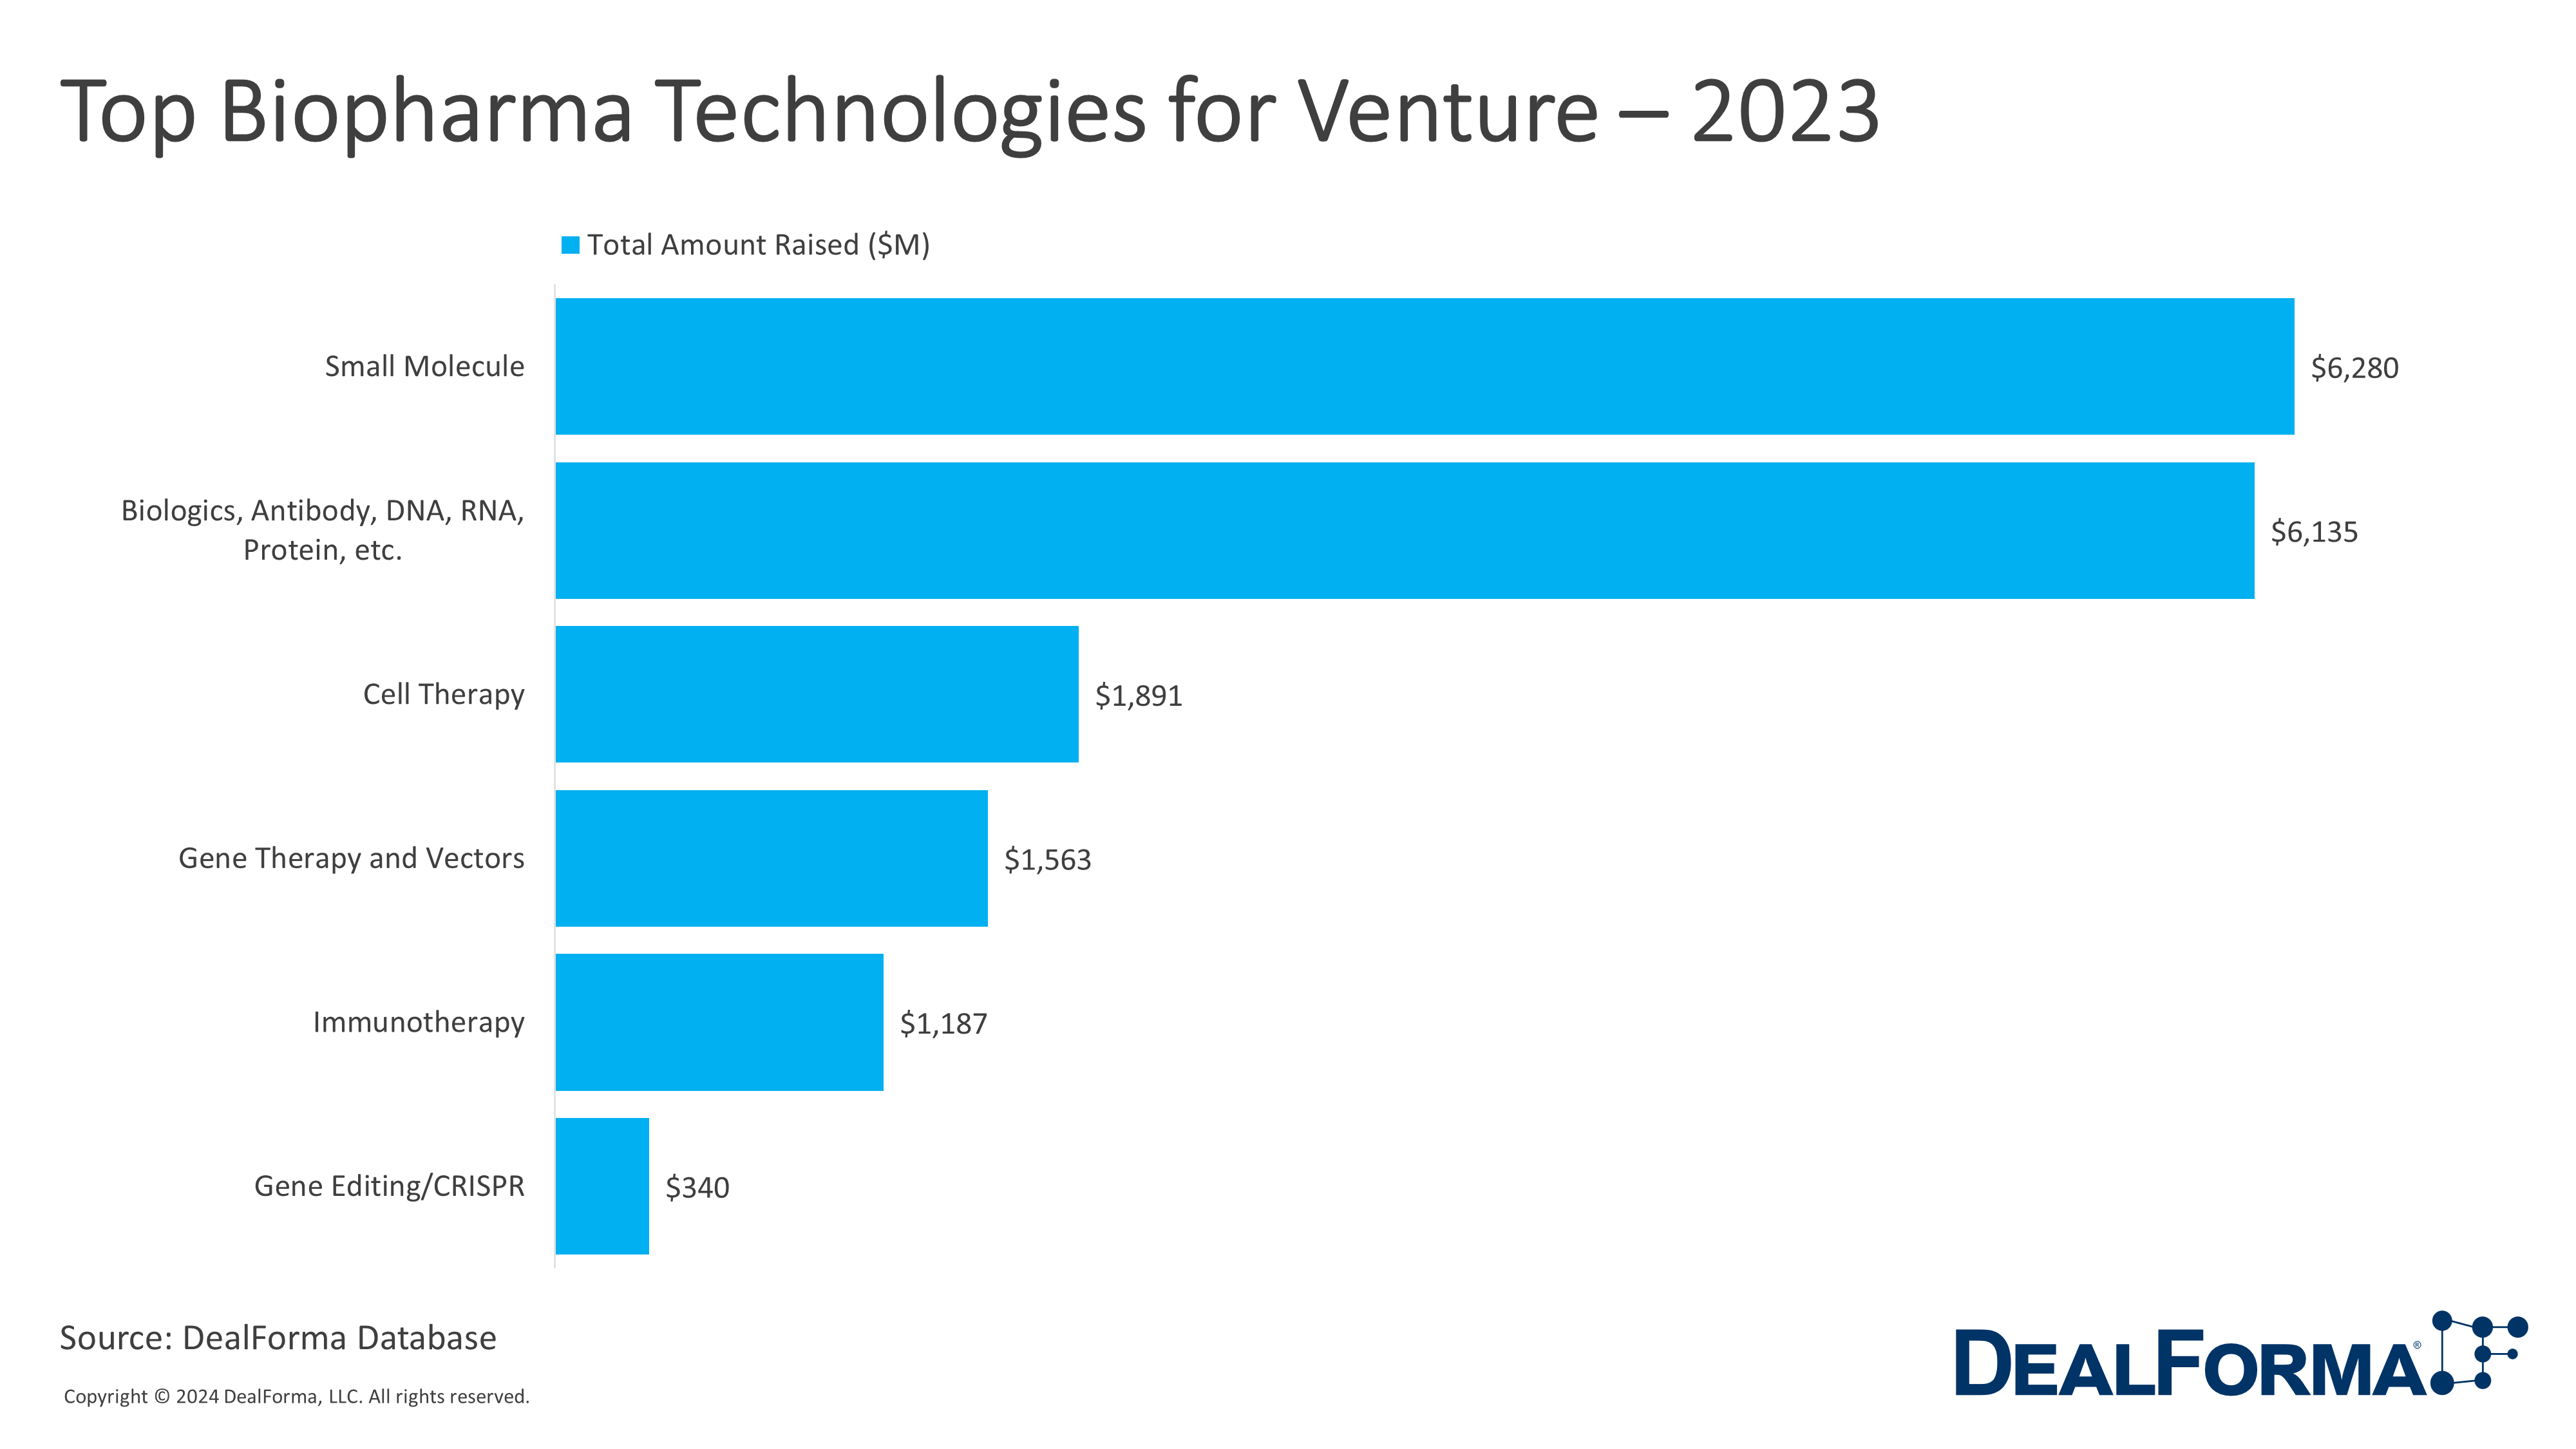 Top Biopharma Technologies for Venture – 2023